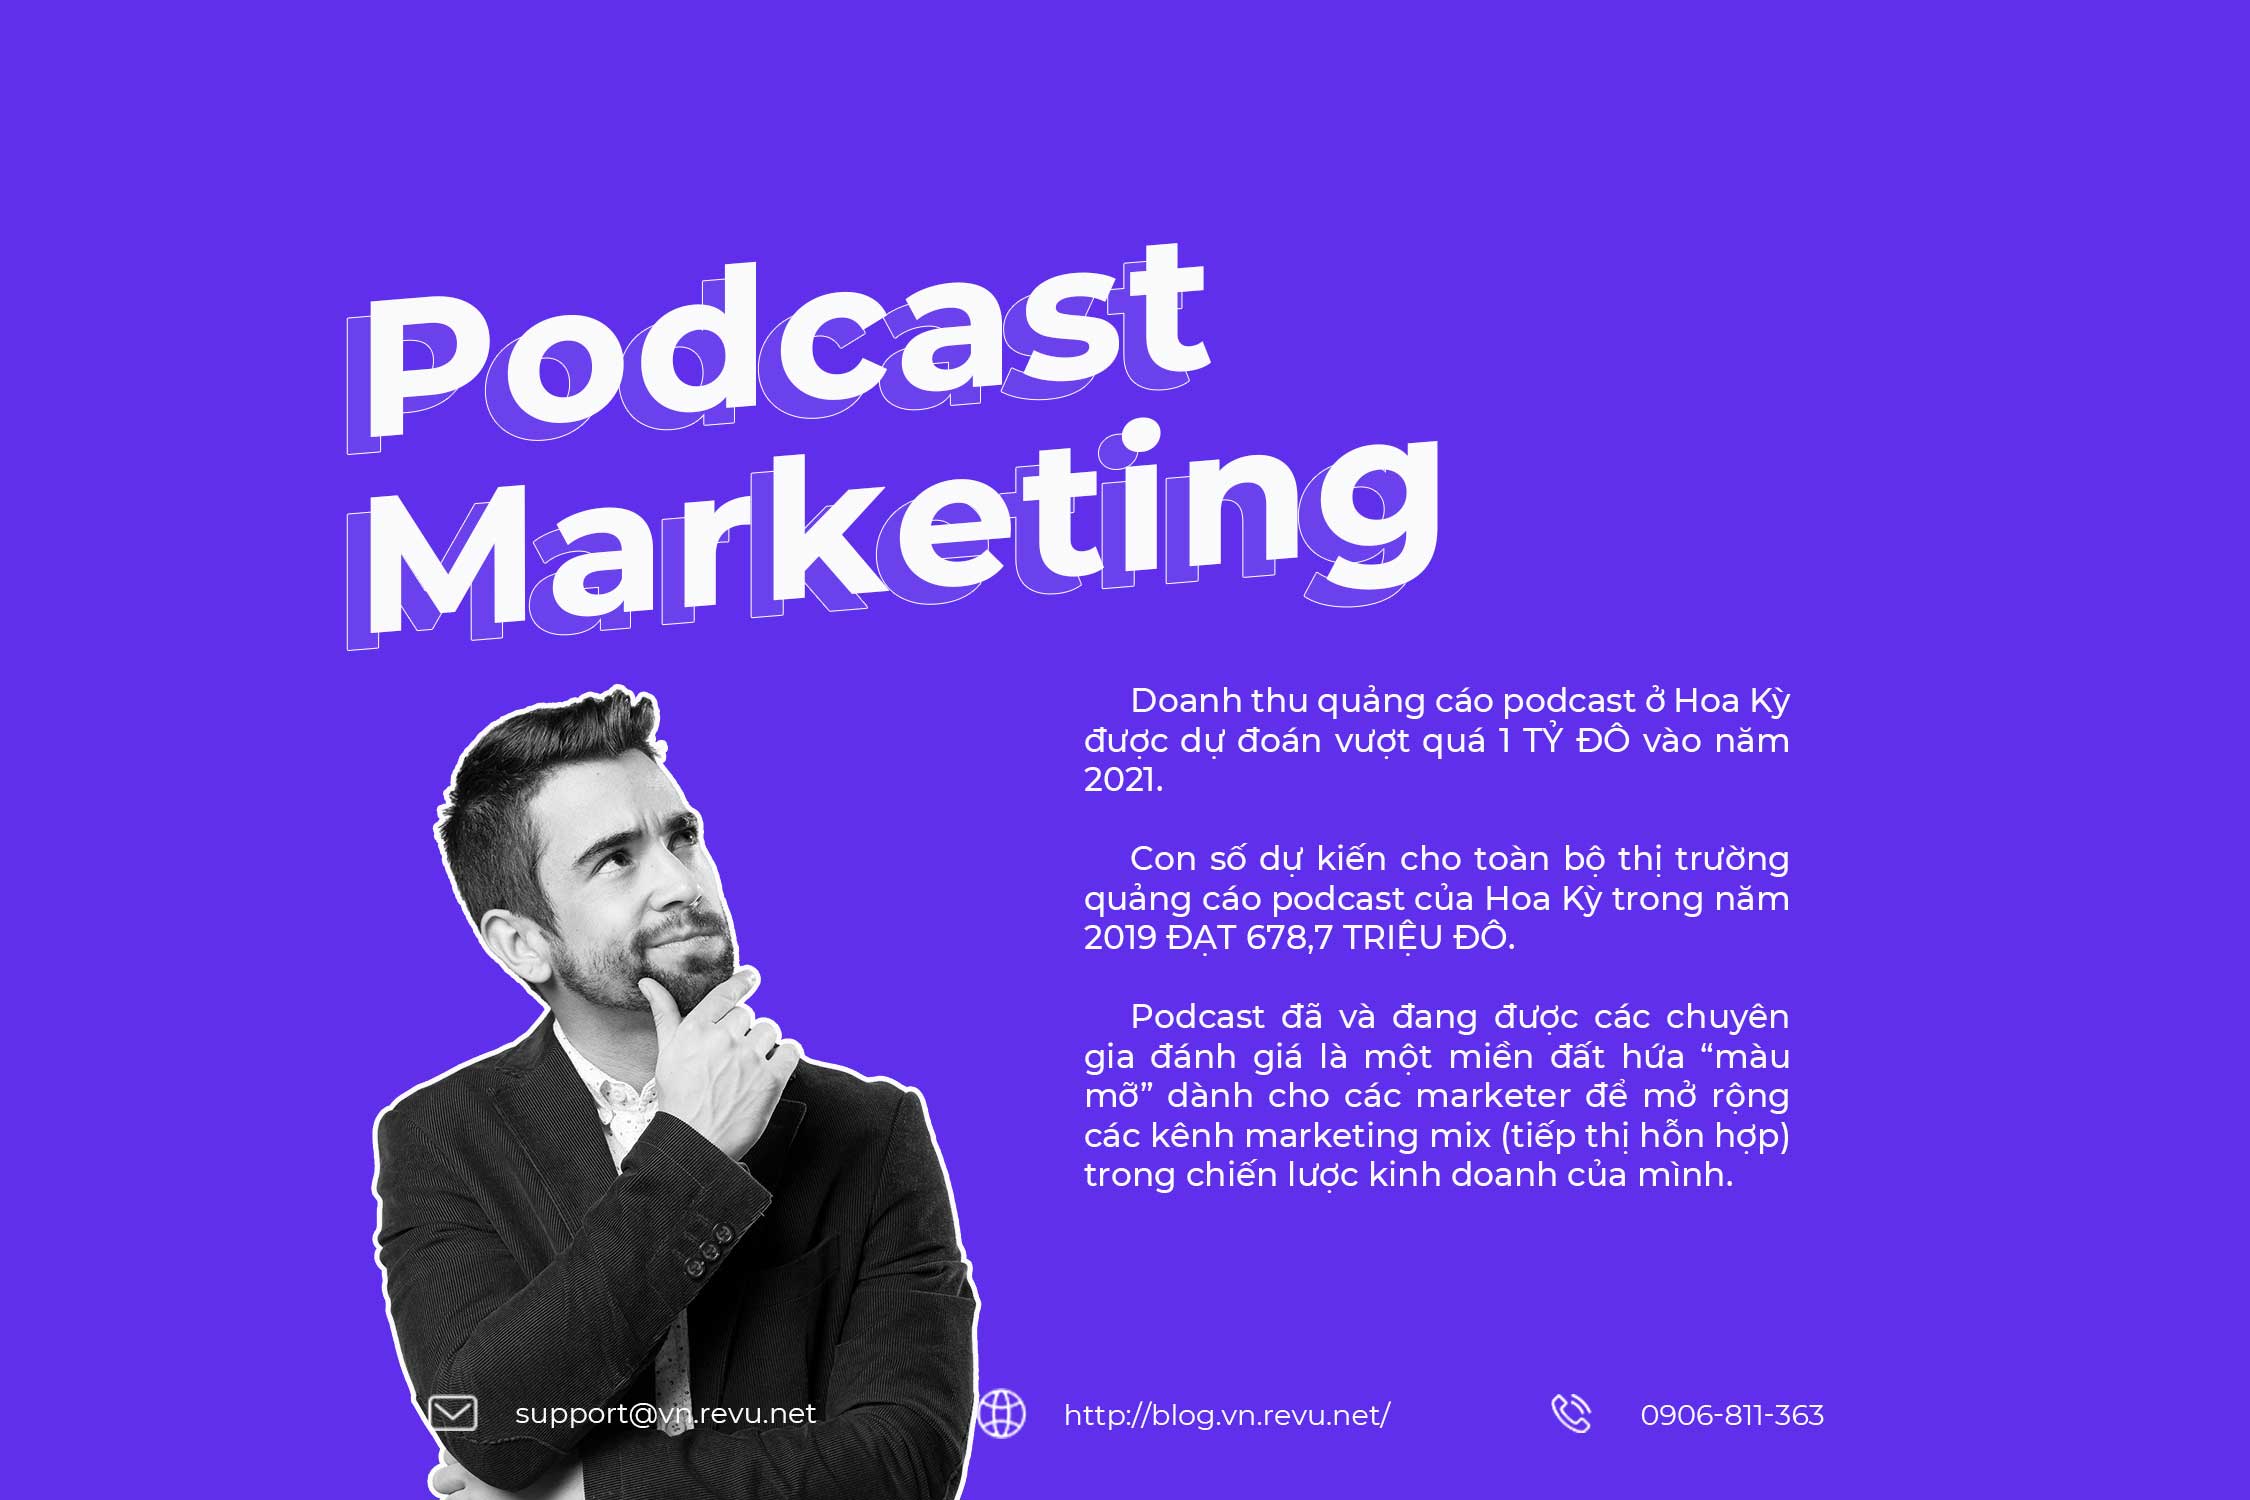 Marketing trên Podcast – Vì sao nên?